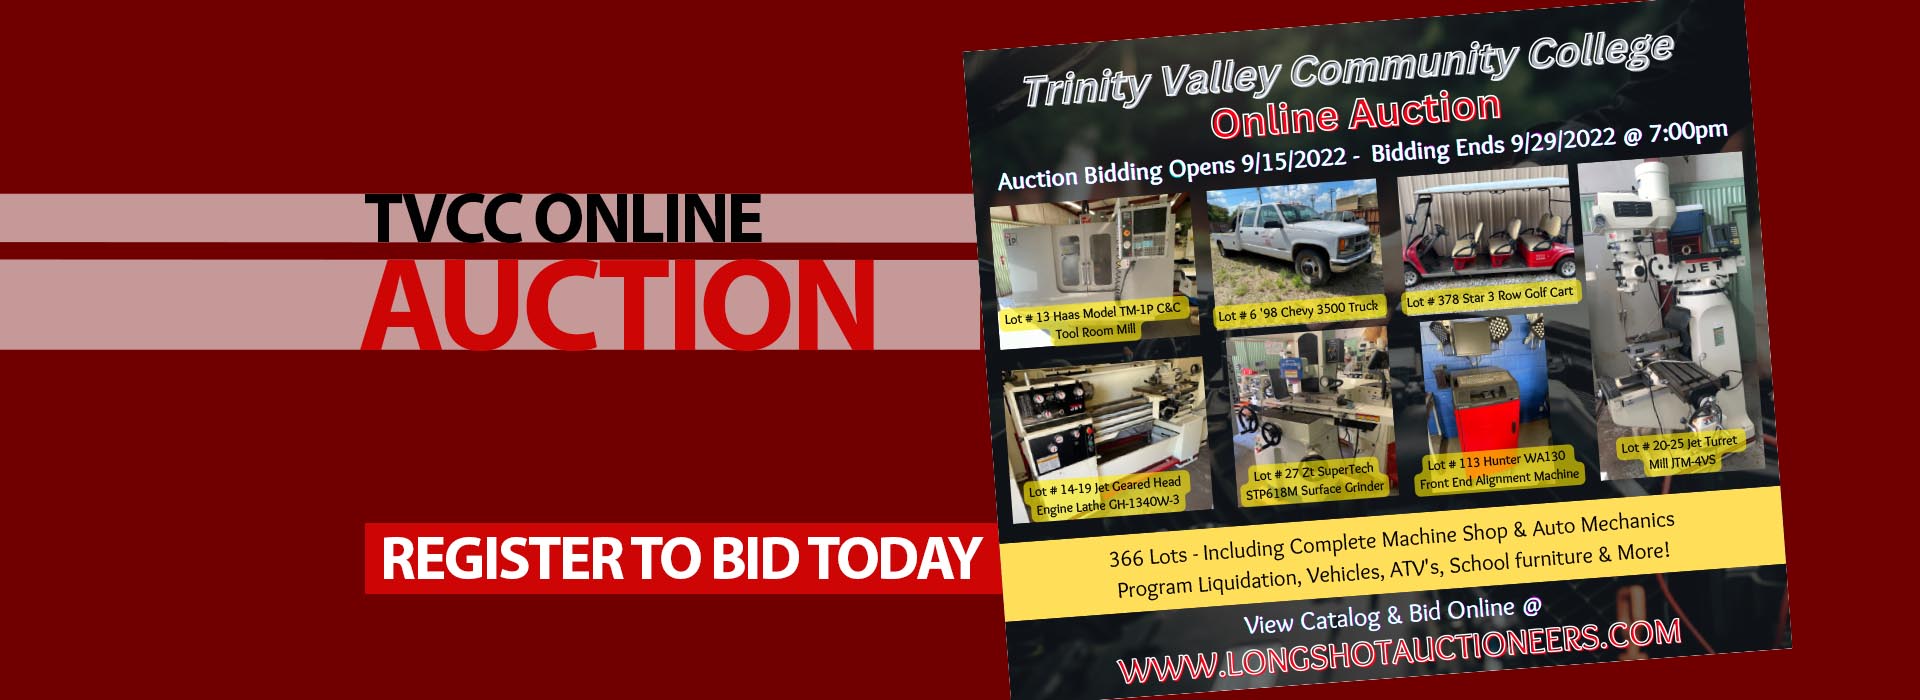 TVCC Online Auction - Register to bid today